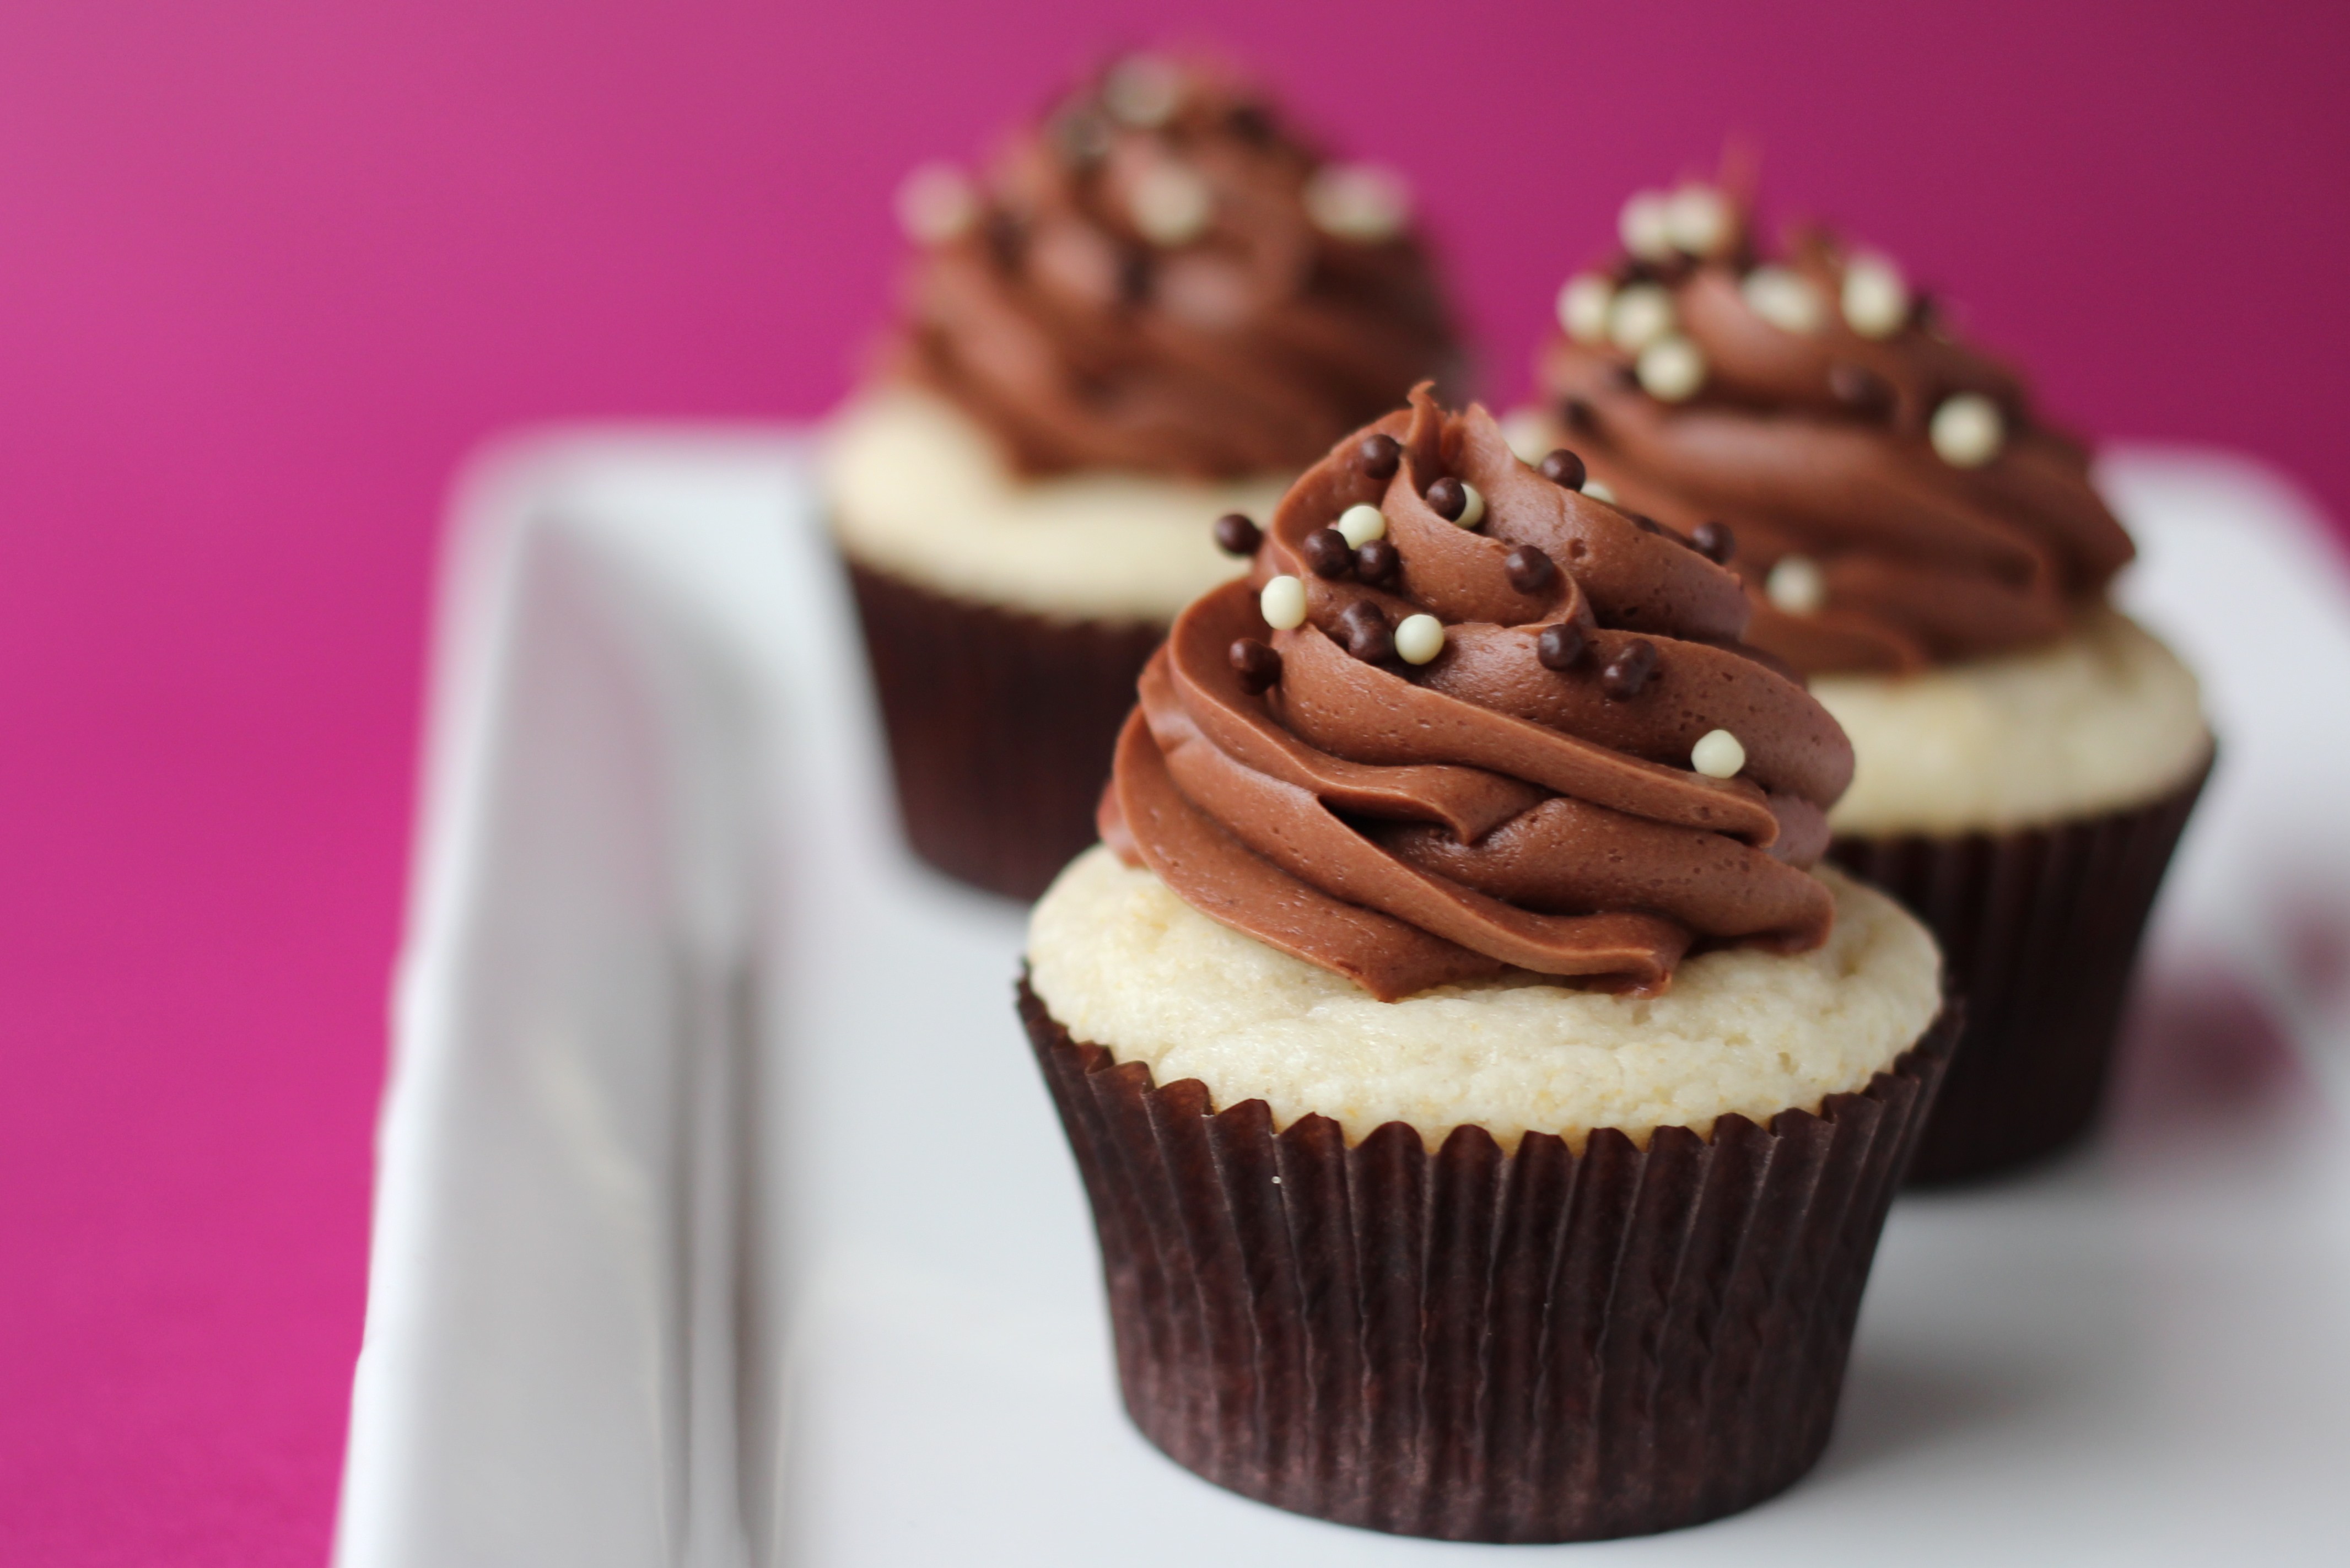 Chocolate and Vanilla Cupcake Recipes